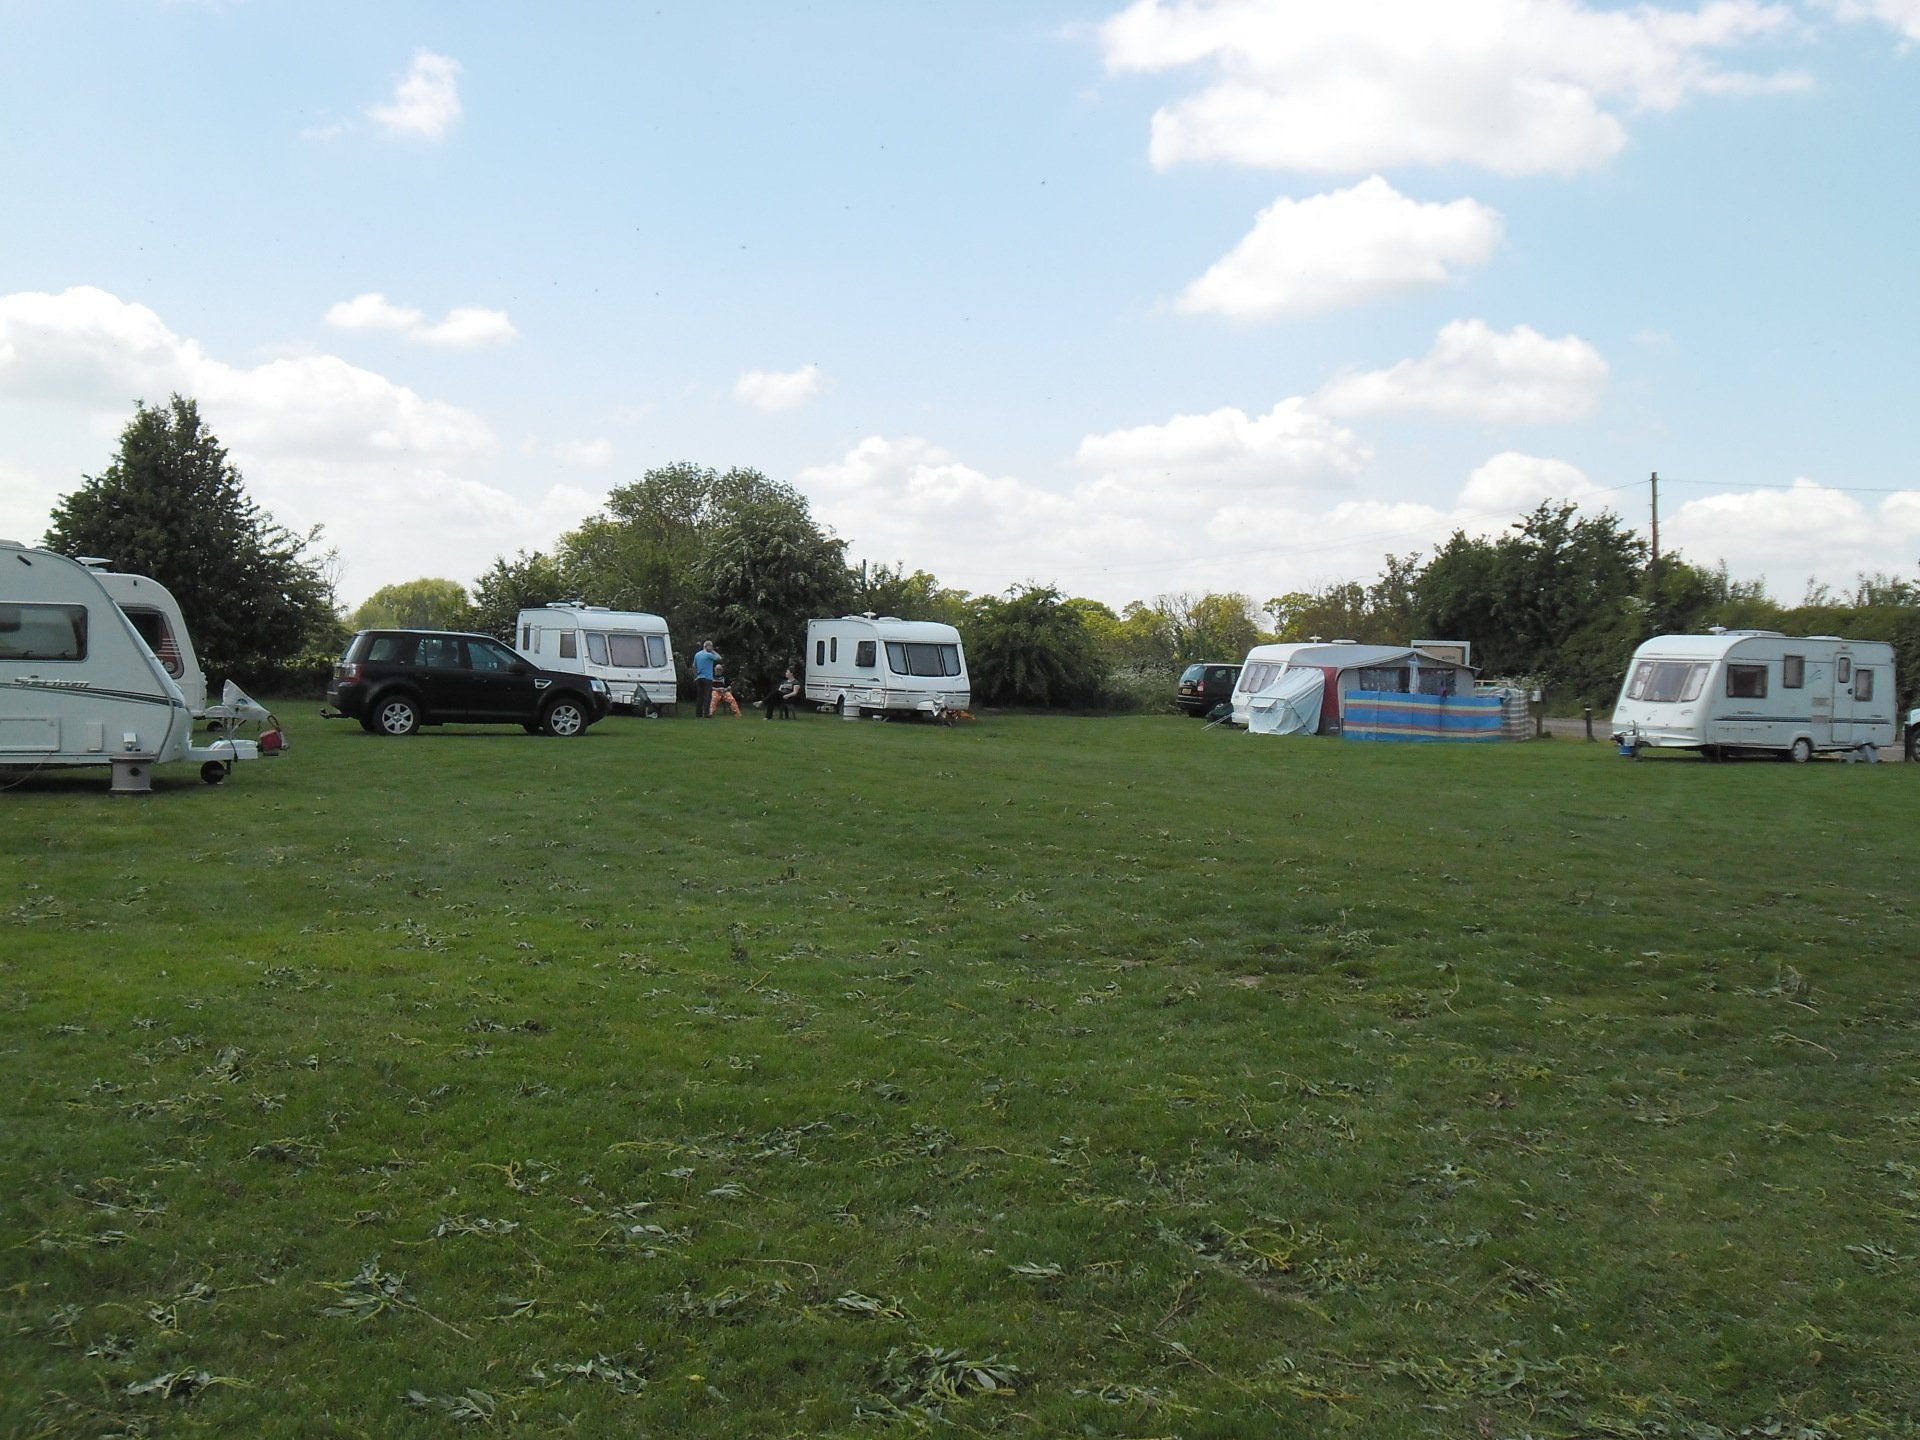 Lower Lode riverside camping and caravan site near Tewkesbury, Gloucestershire